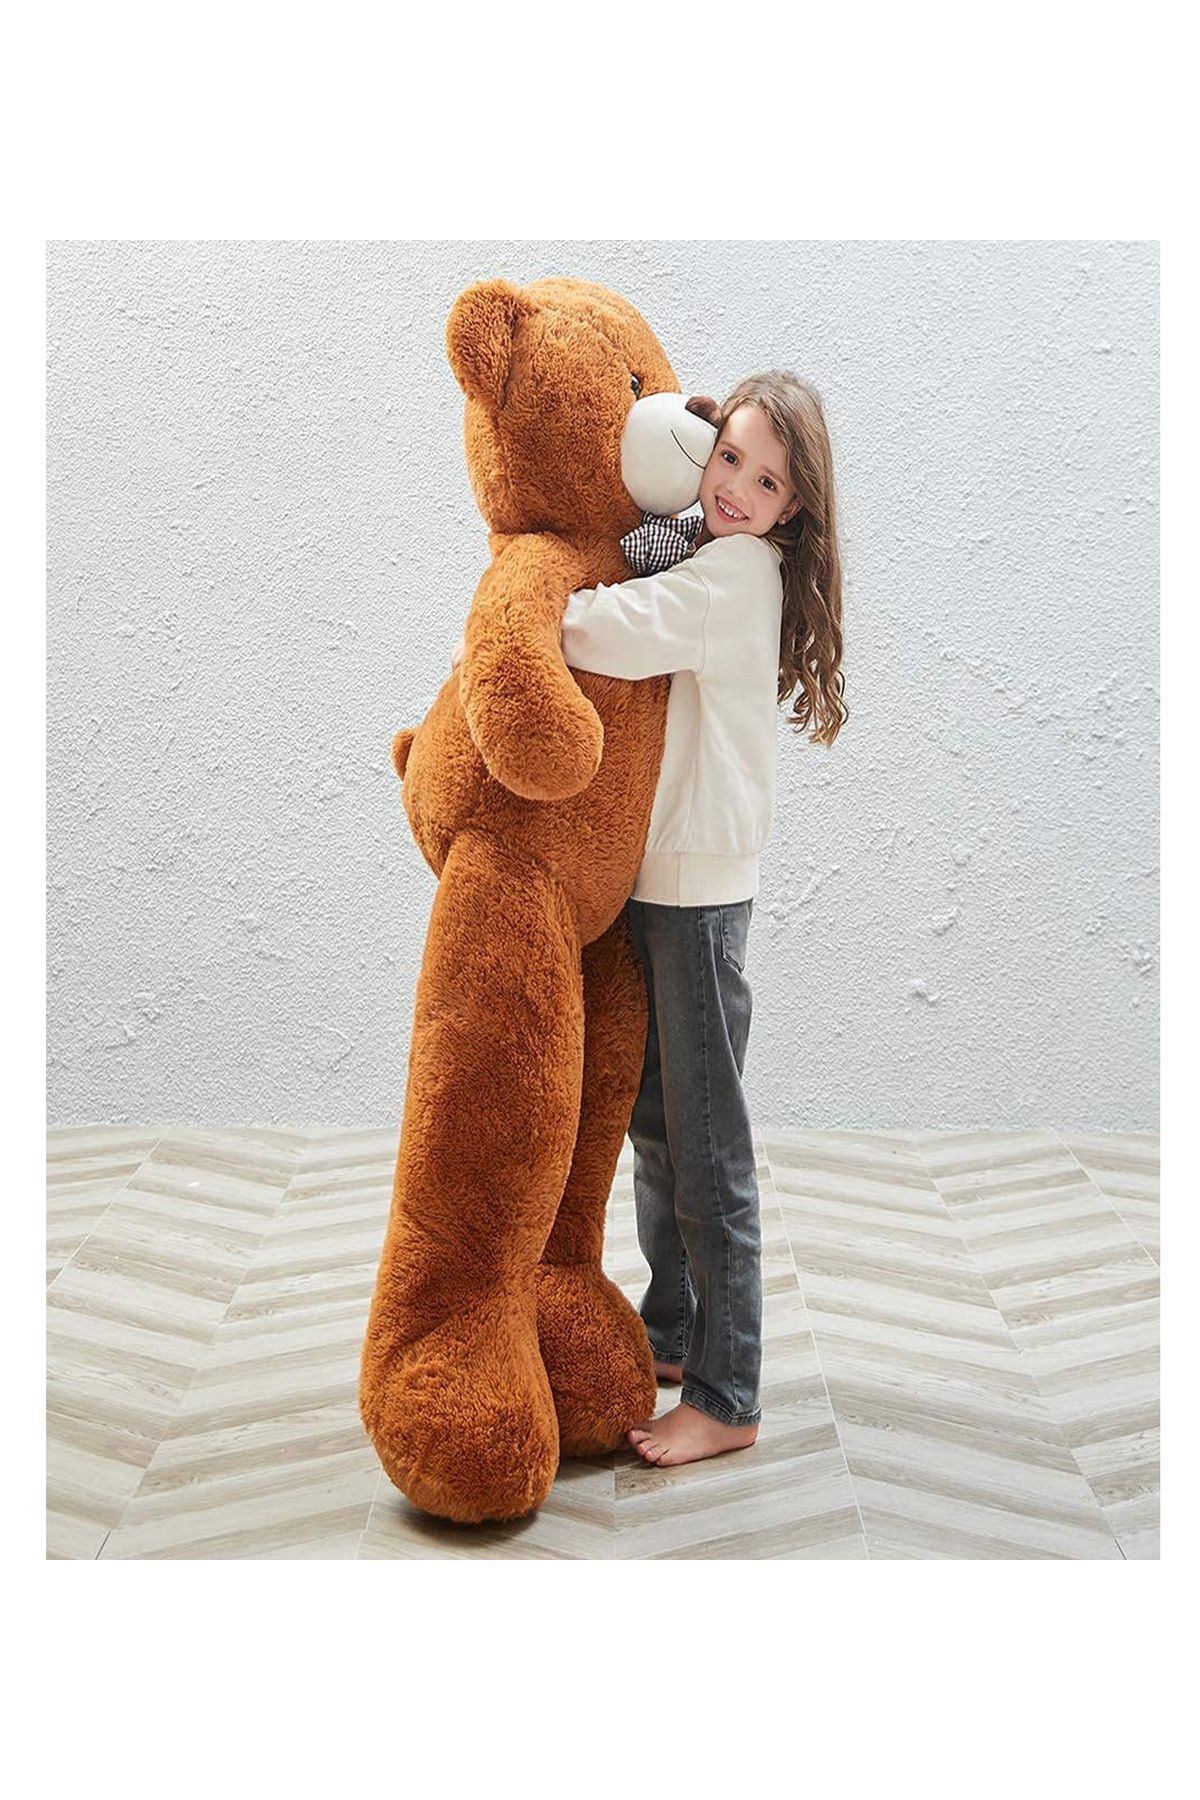 Sole هدیه ویژه برای عاشق - خرس بزرگ مخملی زیبا 140 سانتی متری سایز غول پیکر با پاپیون قیمت SL00CL12KCA